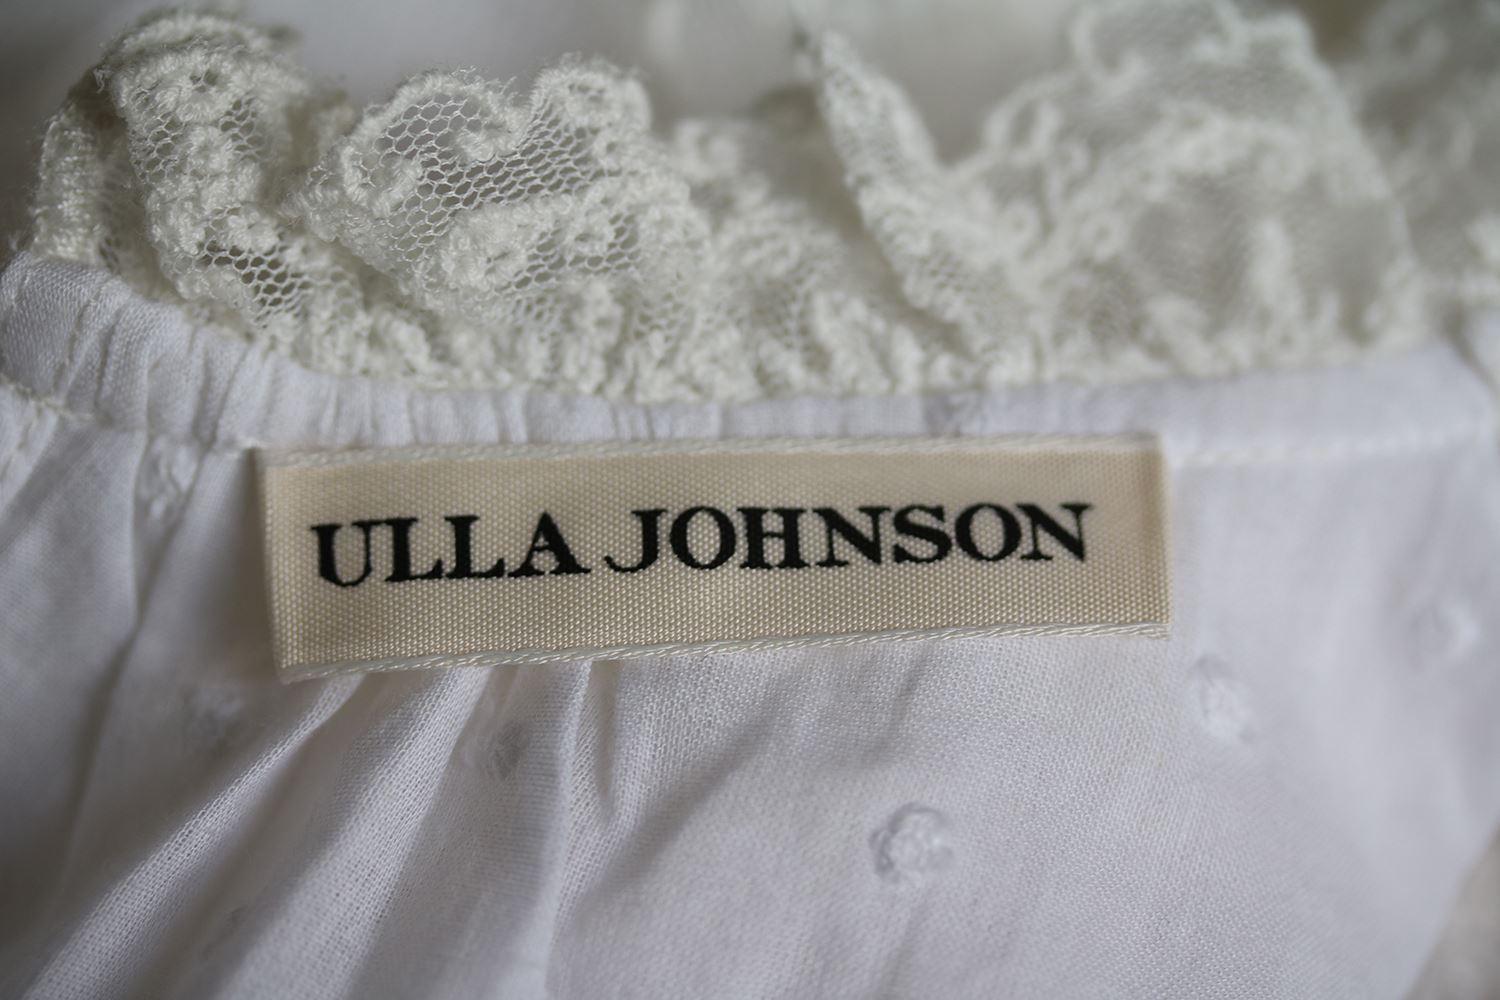 ulla johnson wedding dress